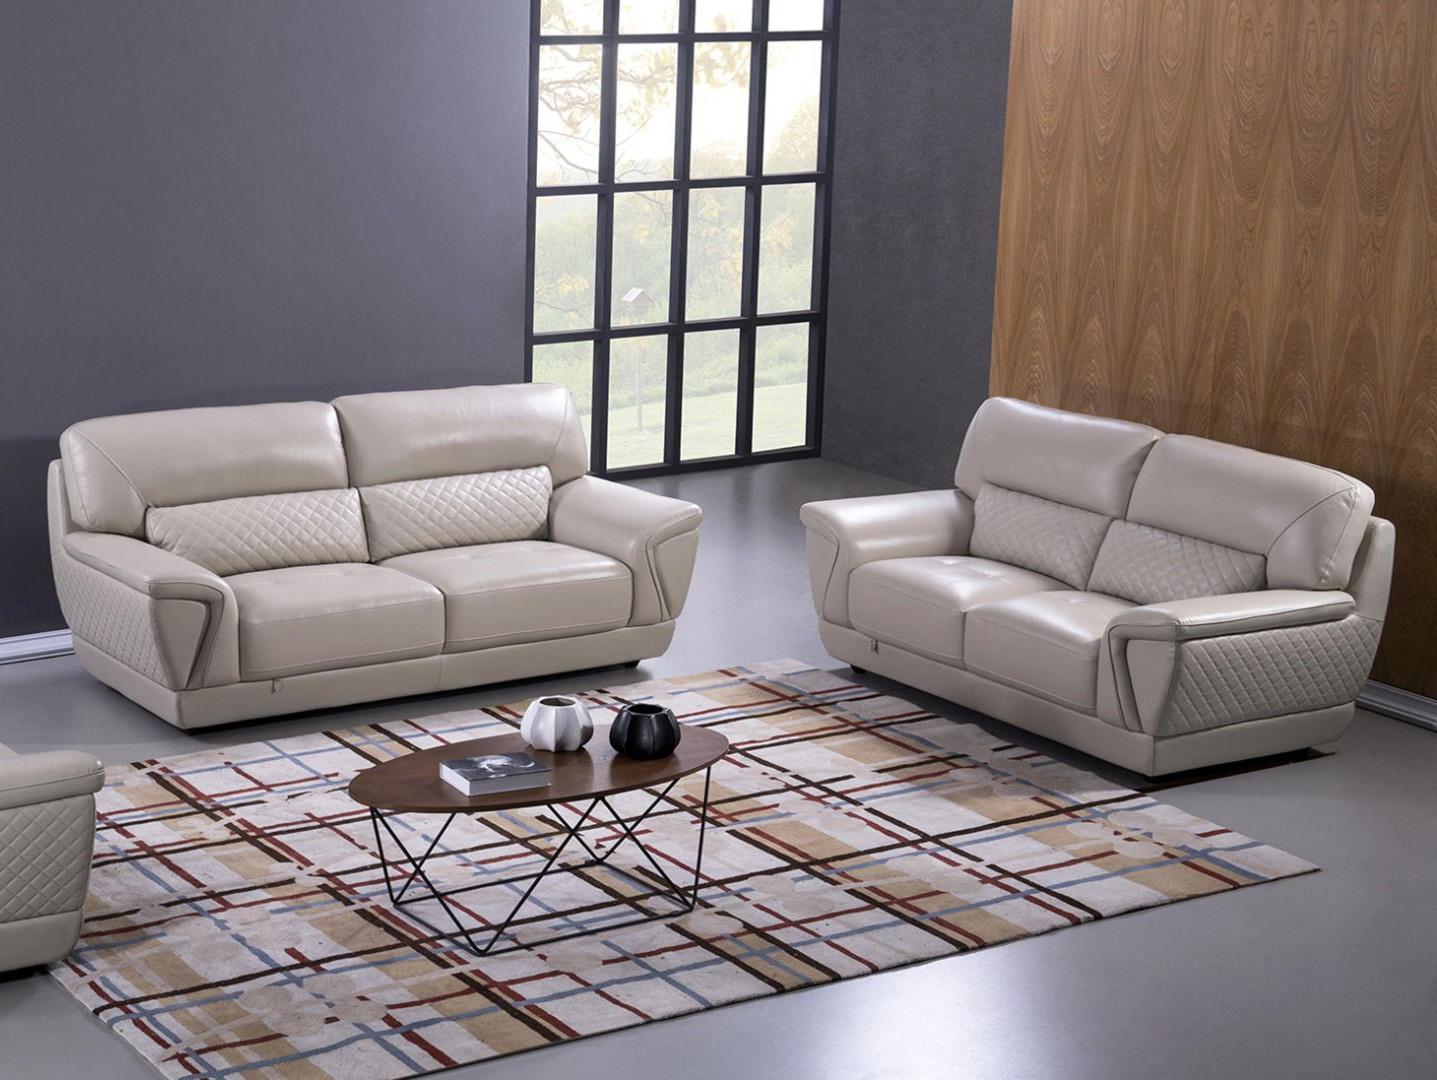 

    
American Eagle Furniture EK099-LG-SF Sofa Light Gray EK099-LG-SF
